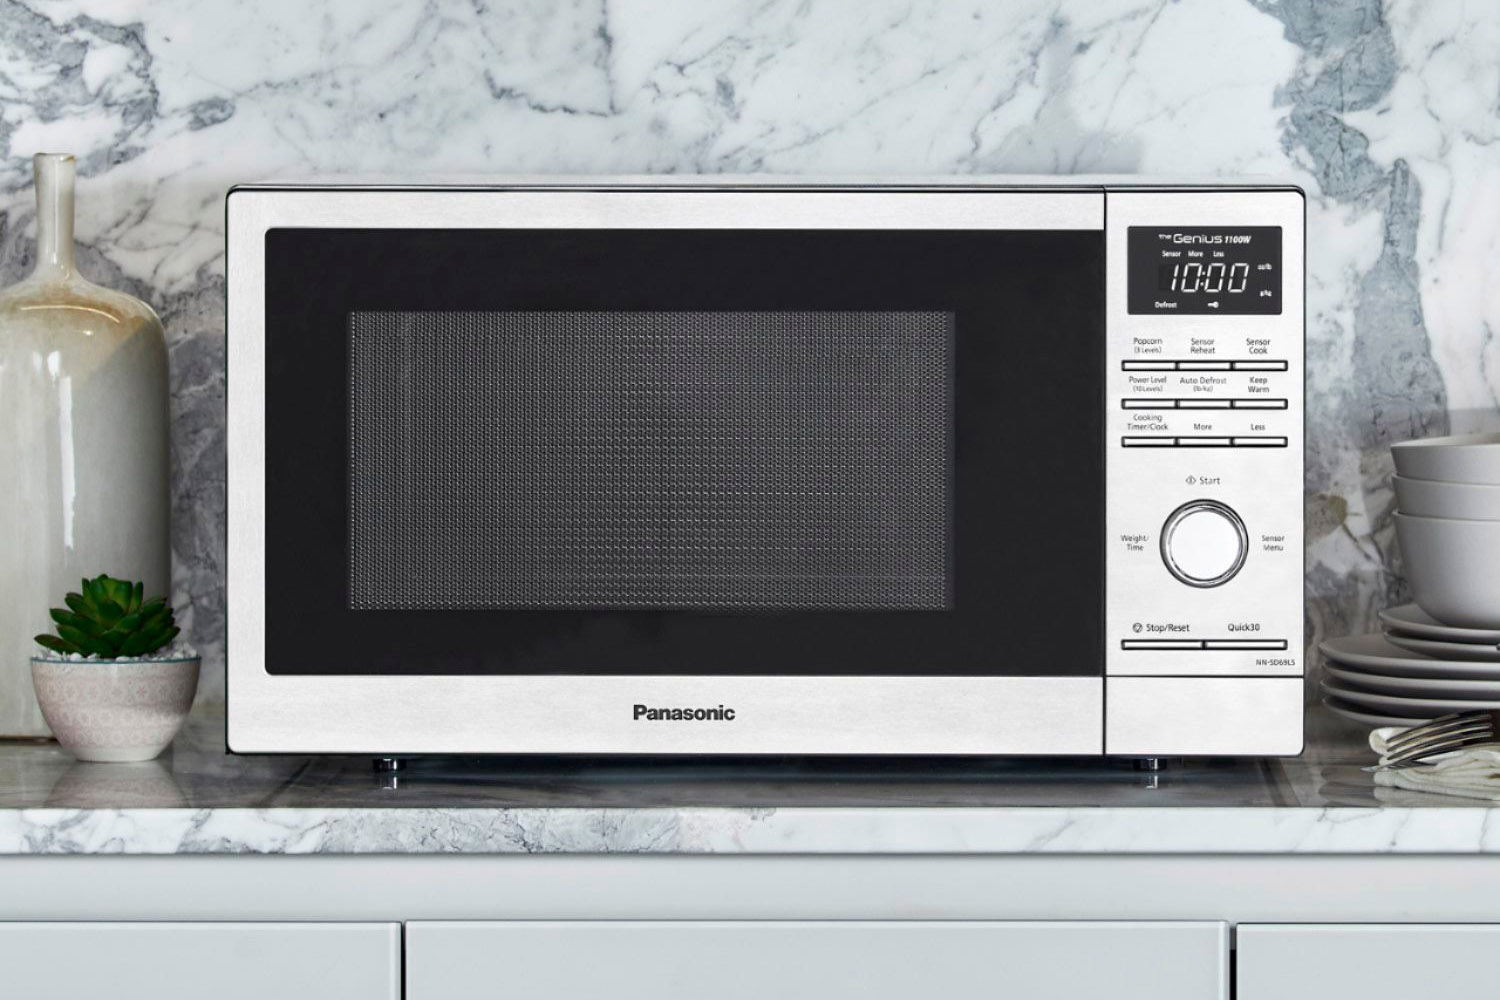 https://www.digitaltrends.com/wp-content/uploads/2022/05/Panasonic-Smart-Inverter-Countertop-Microwave-Oven-close-up.jpg?fit=720%2C480&p=1